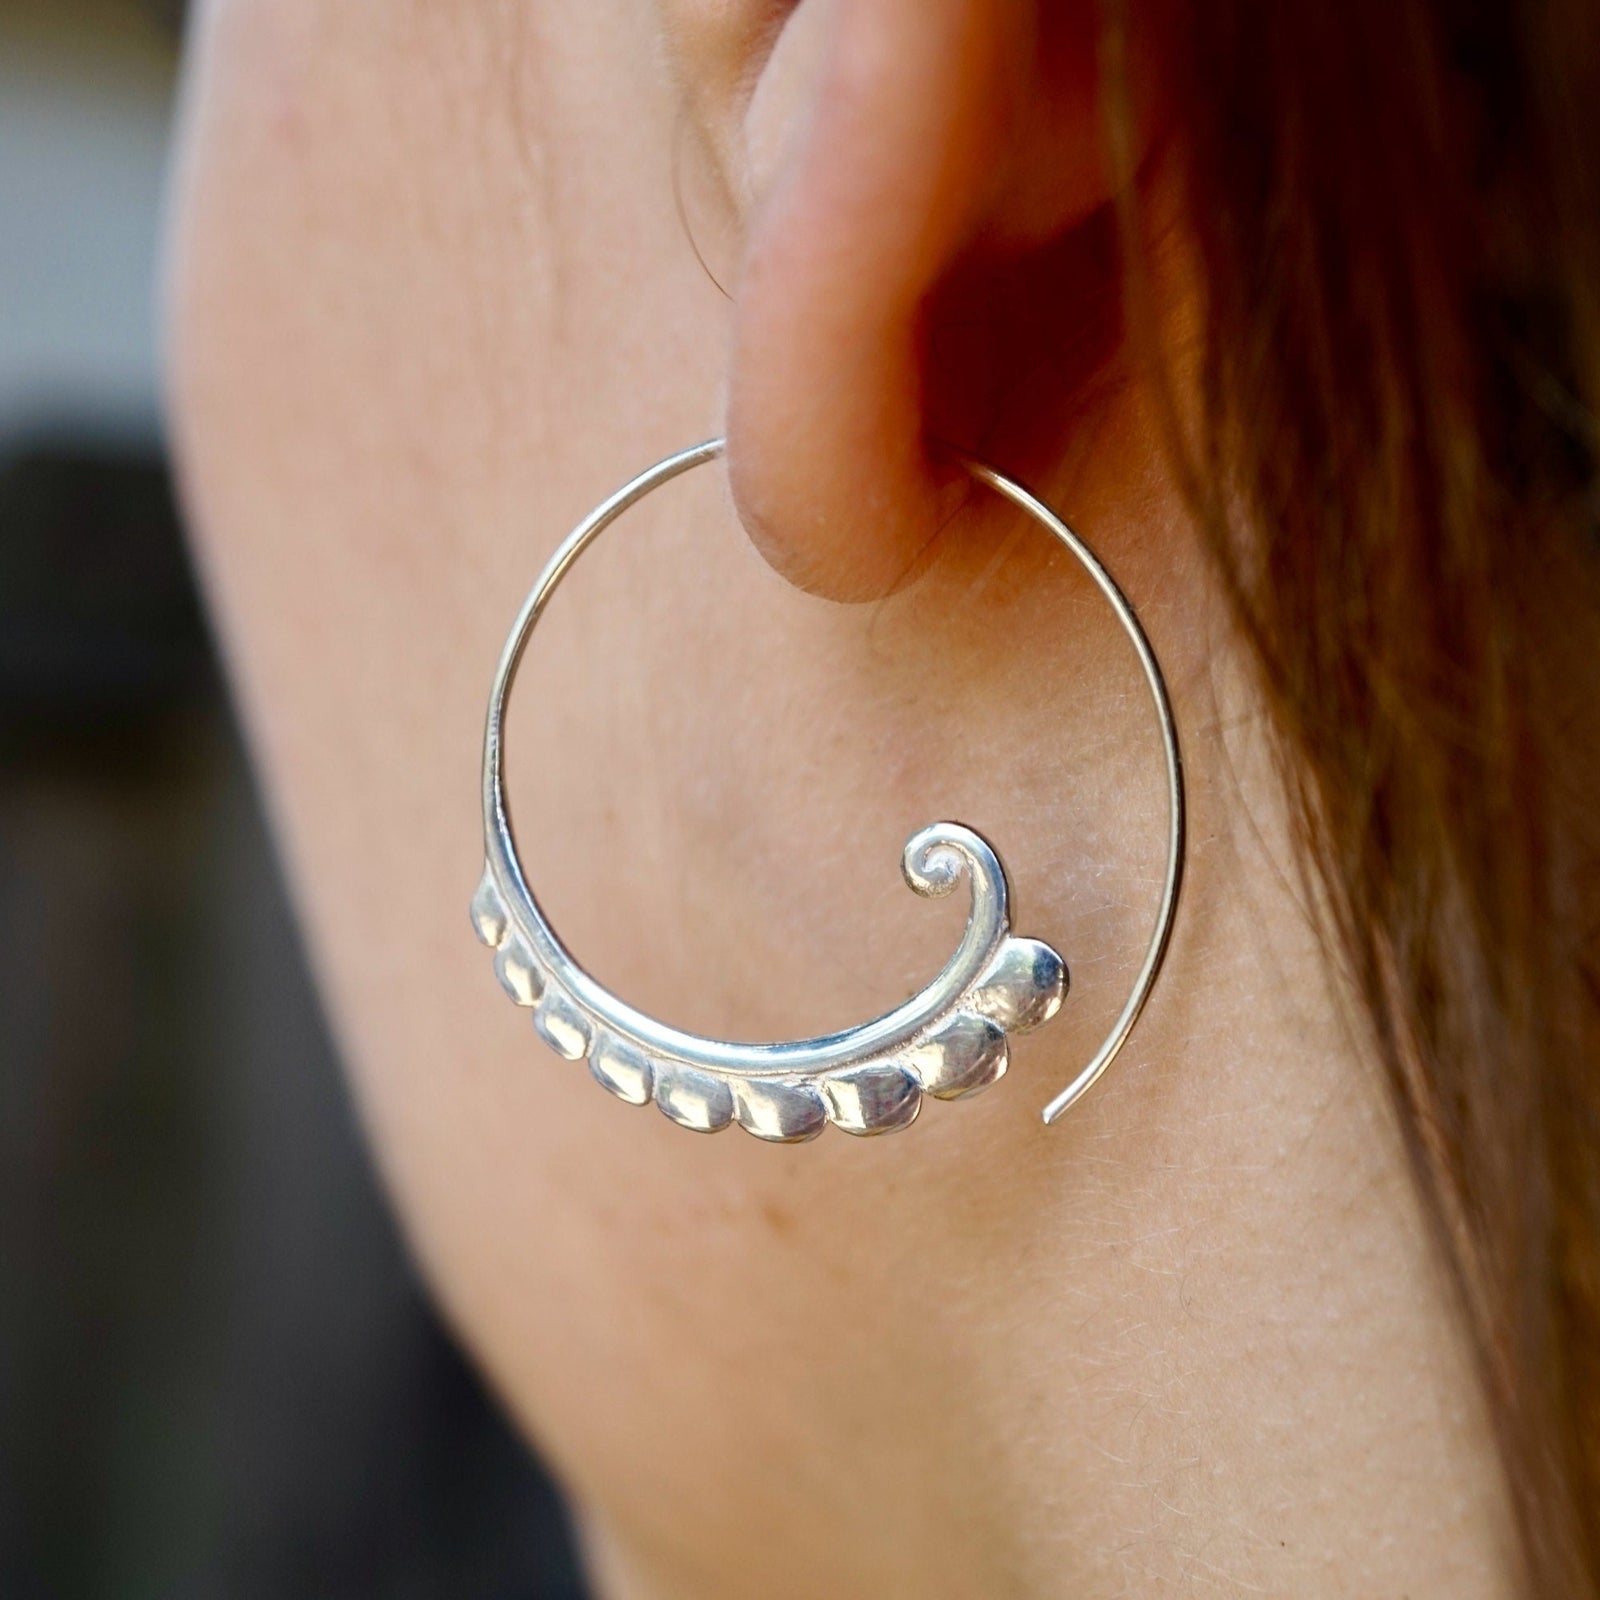 Spiral Earrings Solid Sterling Silver - Minimalist Scalloped Hoop